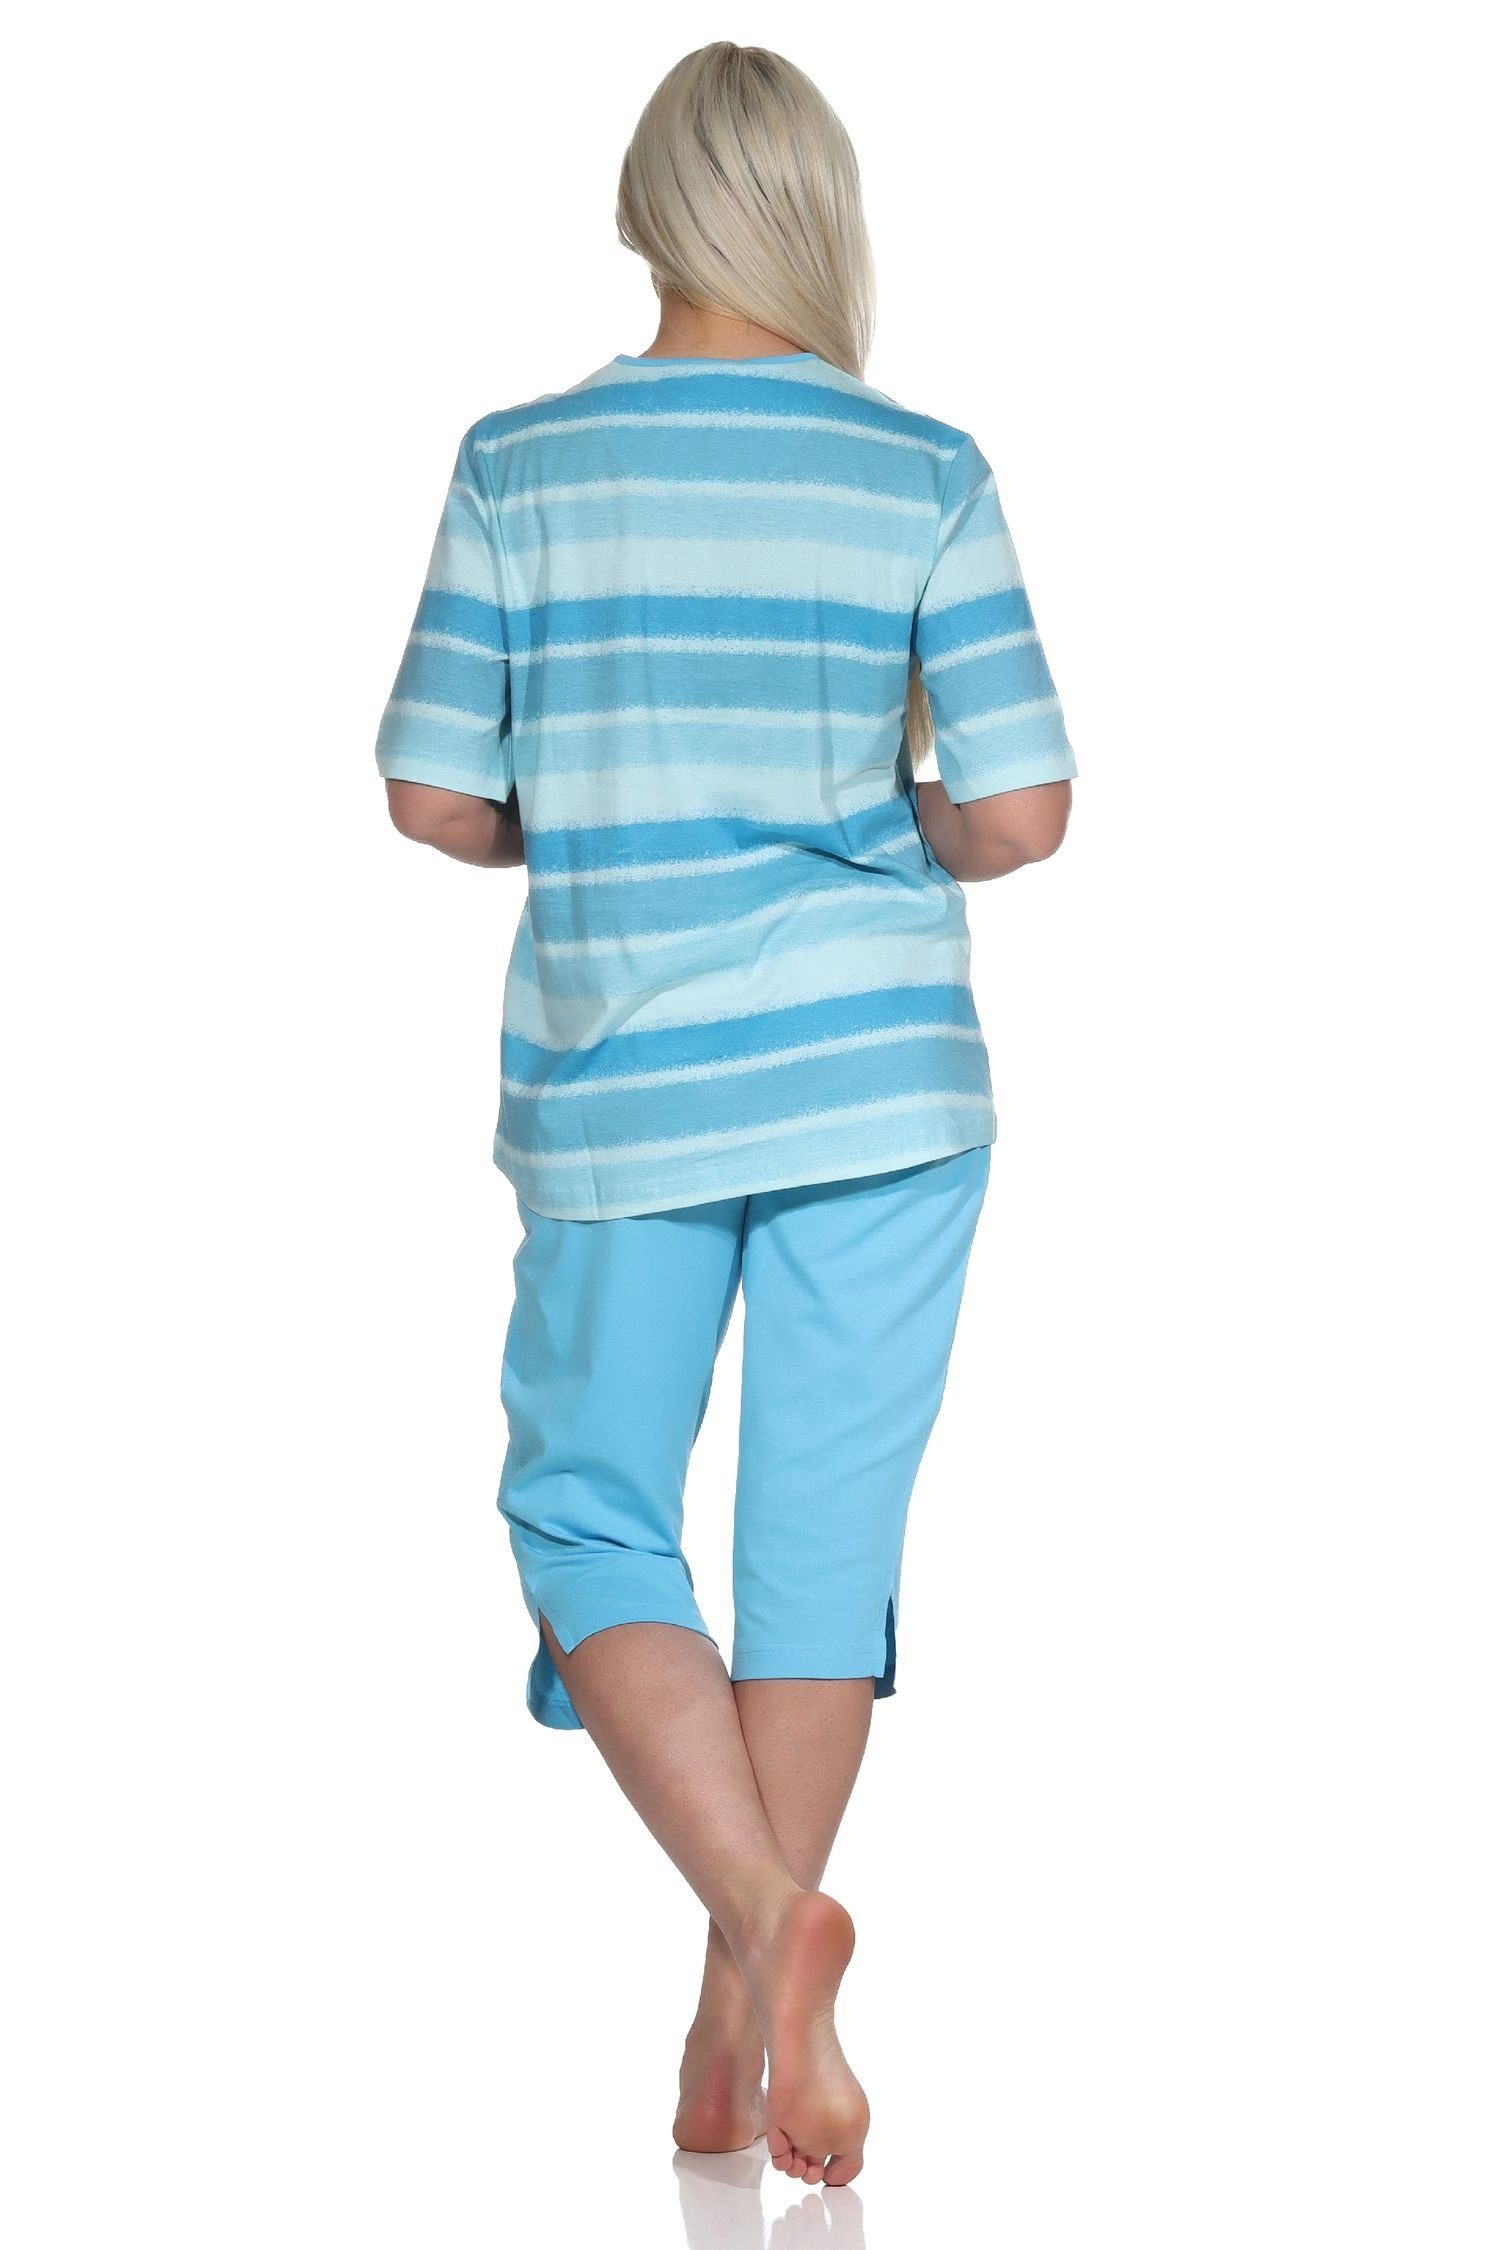 Normann Pyjama Damen Capri Streifen blau farbenfrohen Schlafanzug im kurzarm Pyjama Look